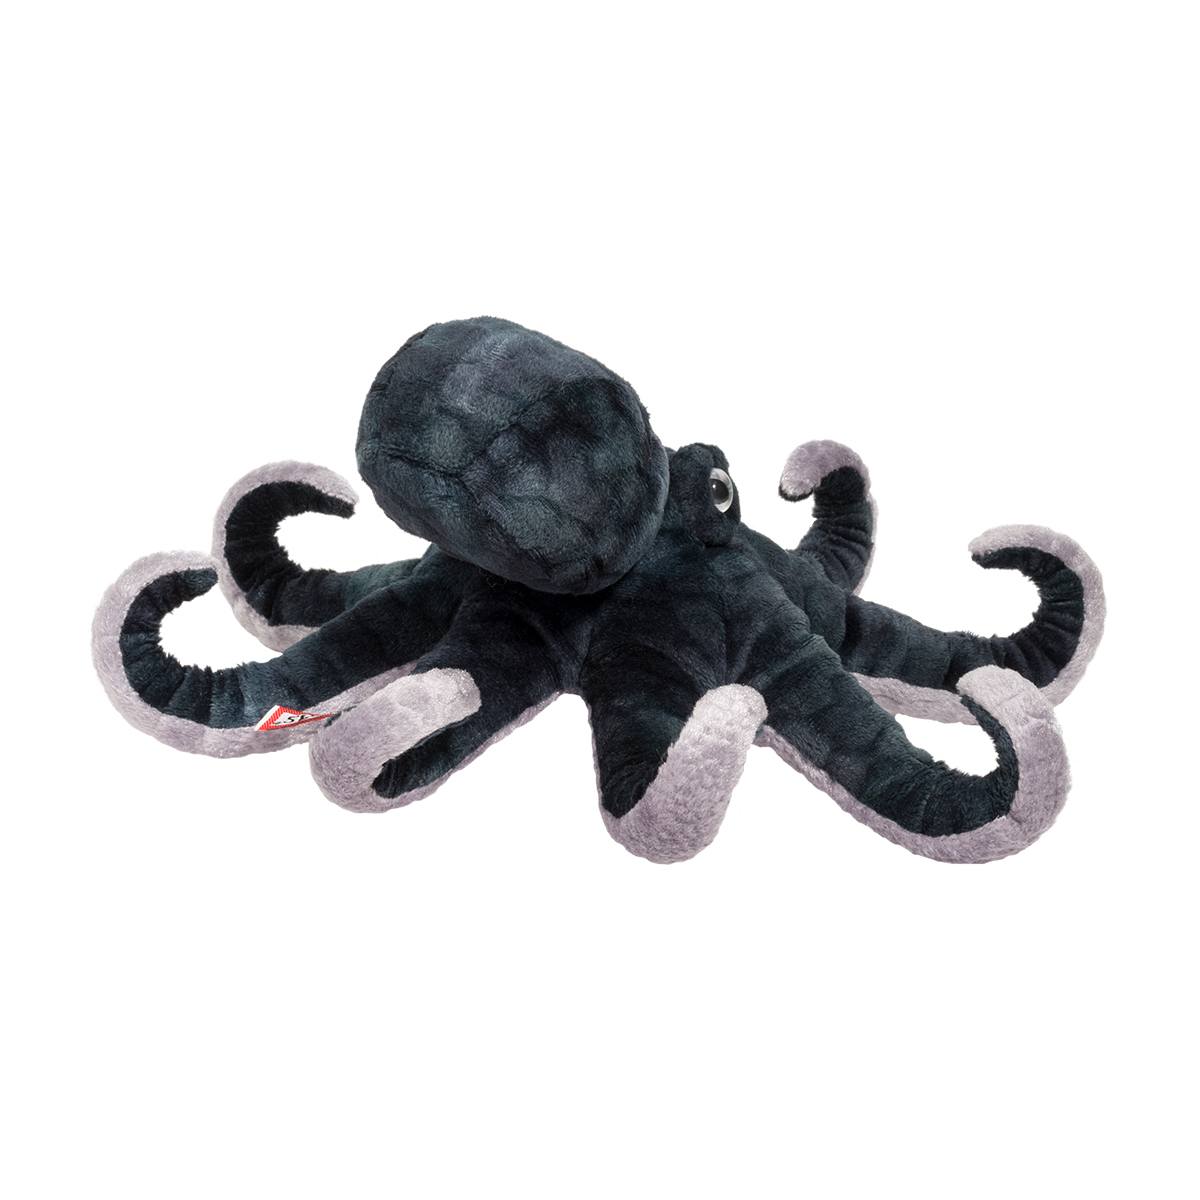 13 Inch Winky Octopus Plush Stuffed Animal by Douglas for sale online 